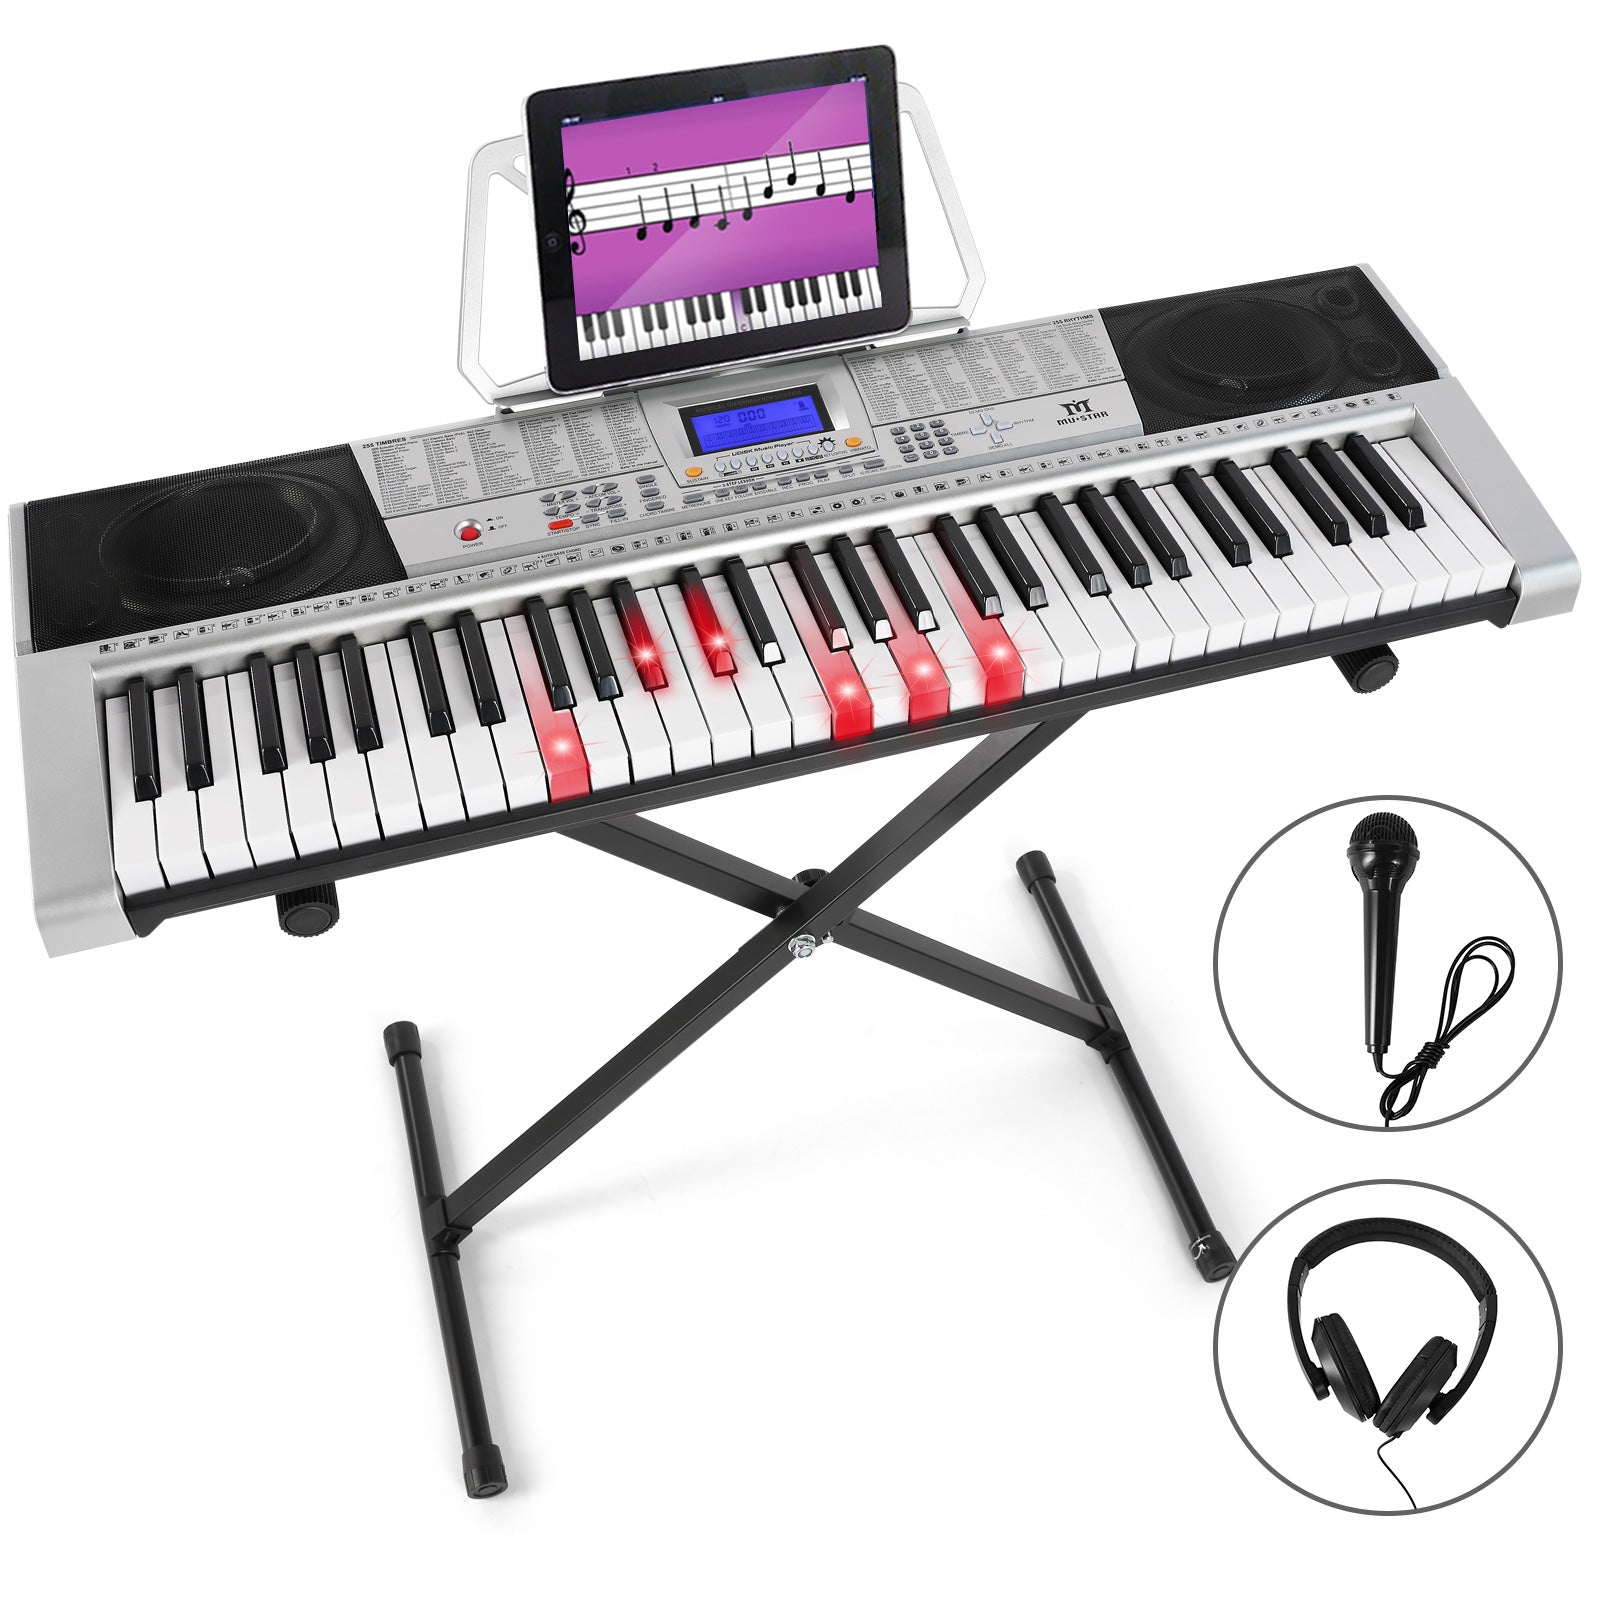 MUSTAR MEKS-400, 61 Key Piano Keyboard, Learning Electric Piano Keyboa